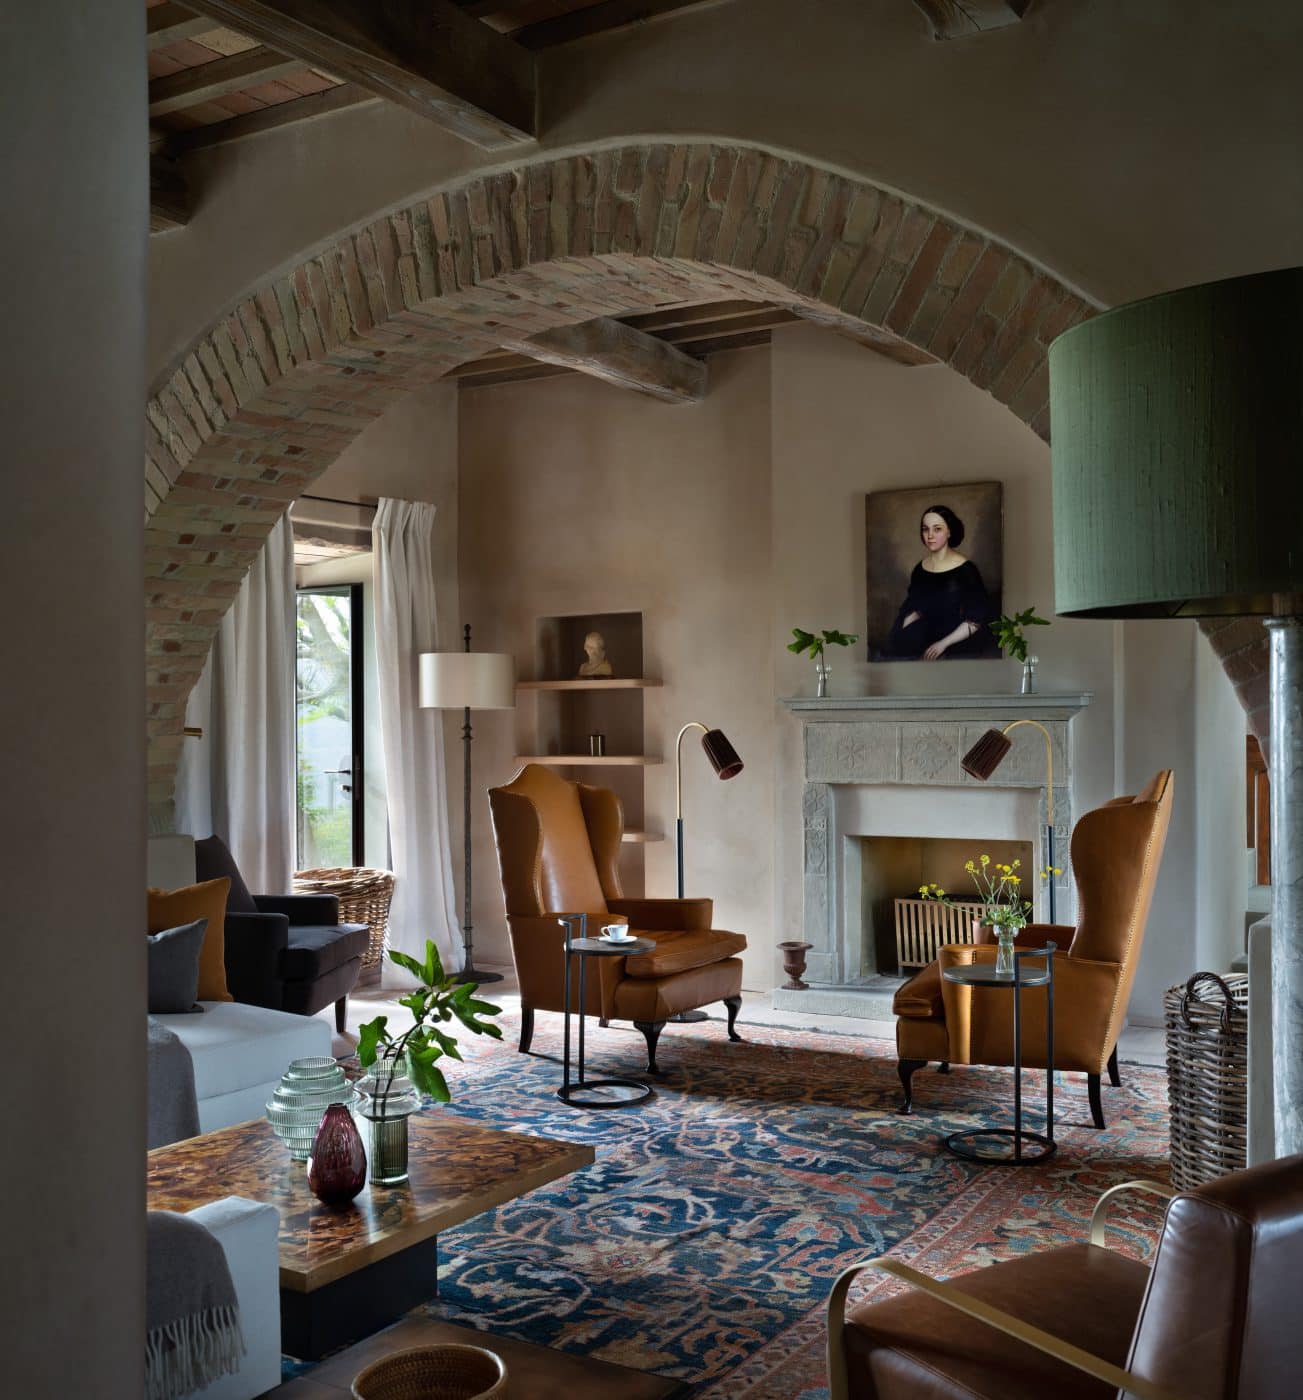 Ceroschene villa living room with antique Persian rug